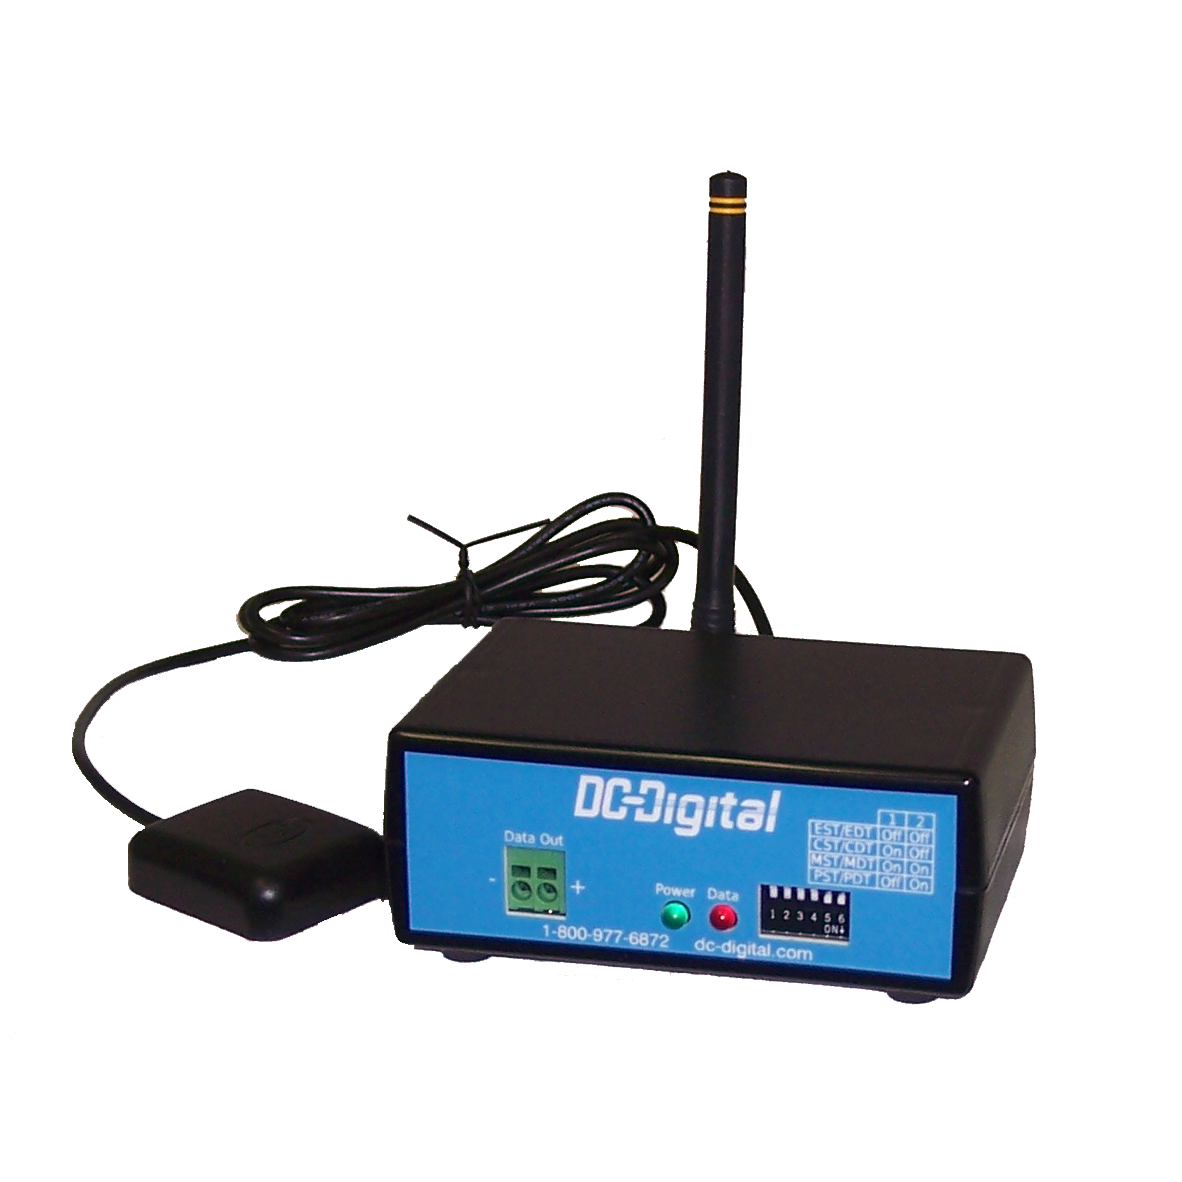 (DC-GPS-MI-2-Master) Master Clock Transmitter with GPS Receiver Synchronized, 4-Wire & RF Wireless Data Output